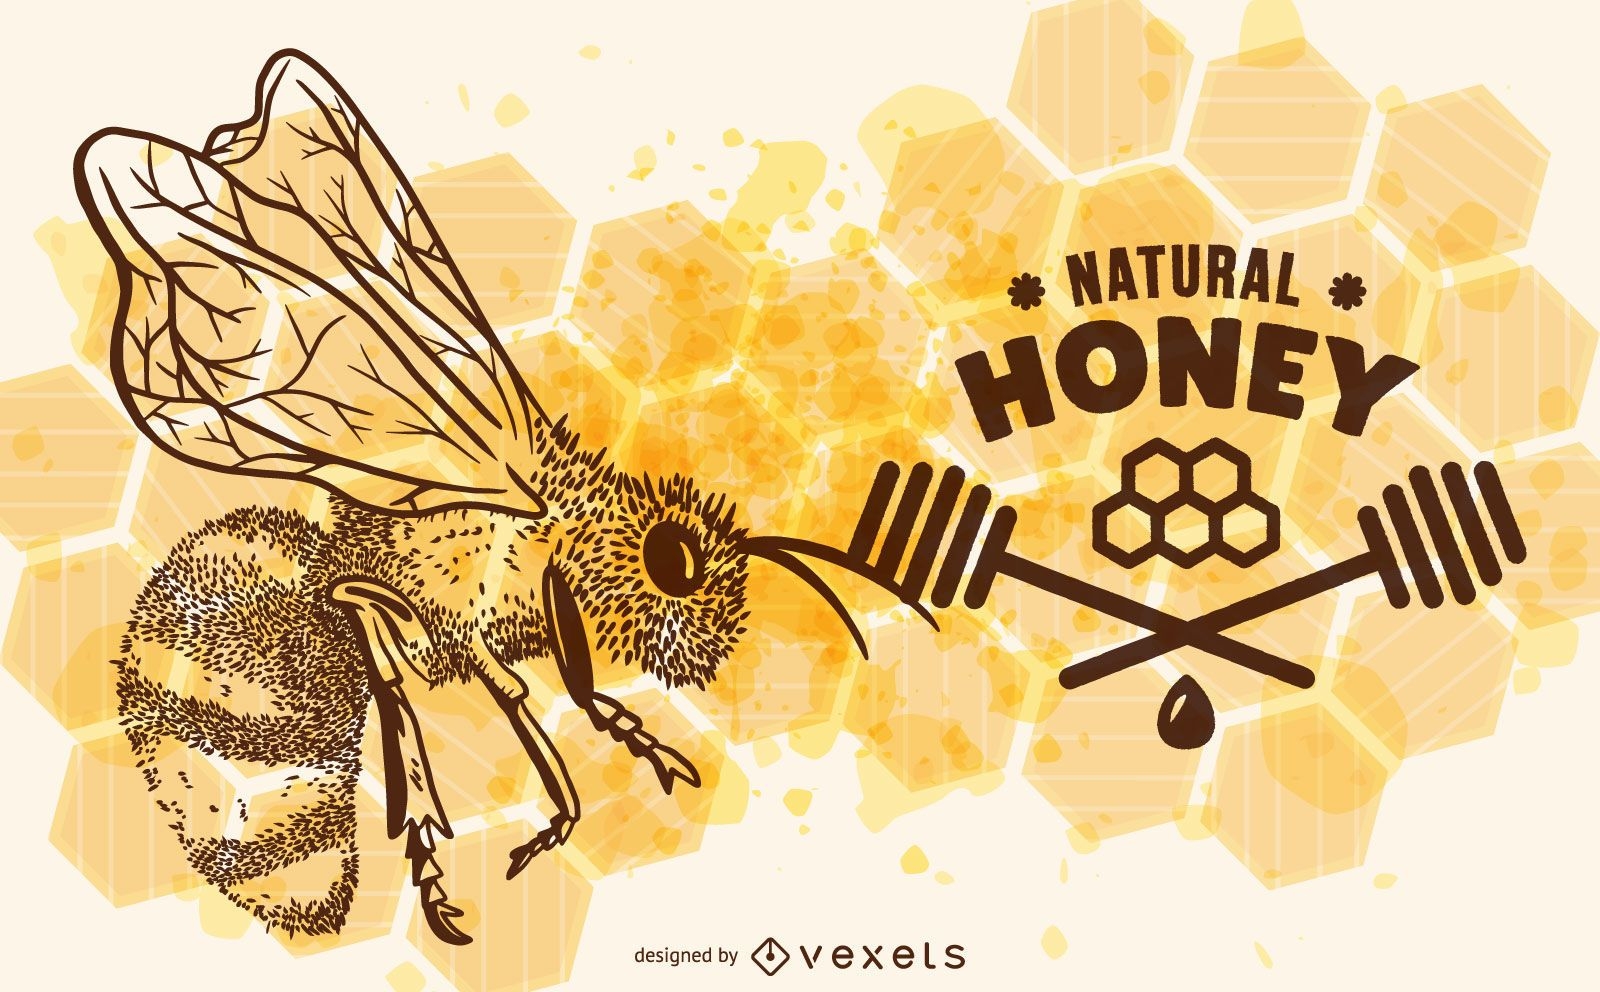 Natural honey bee illustration